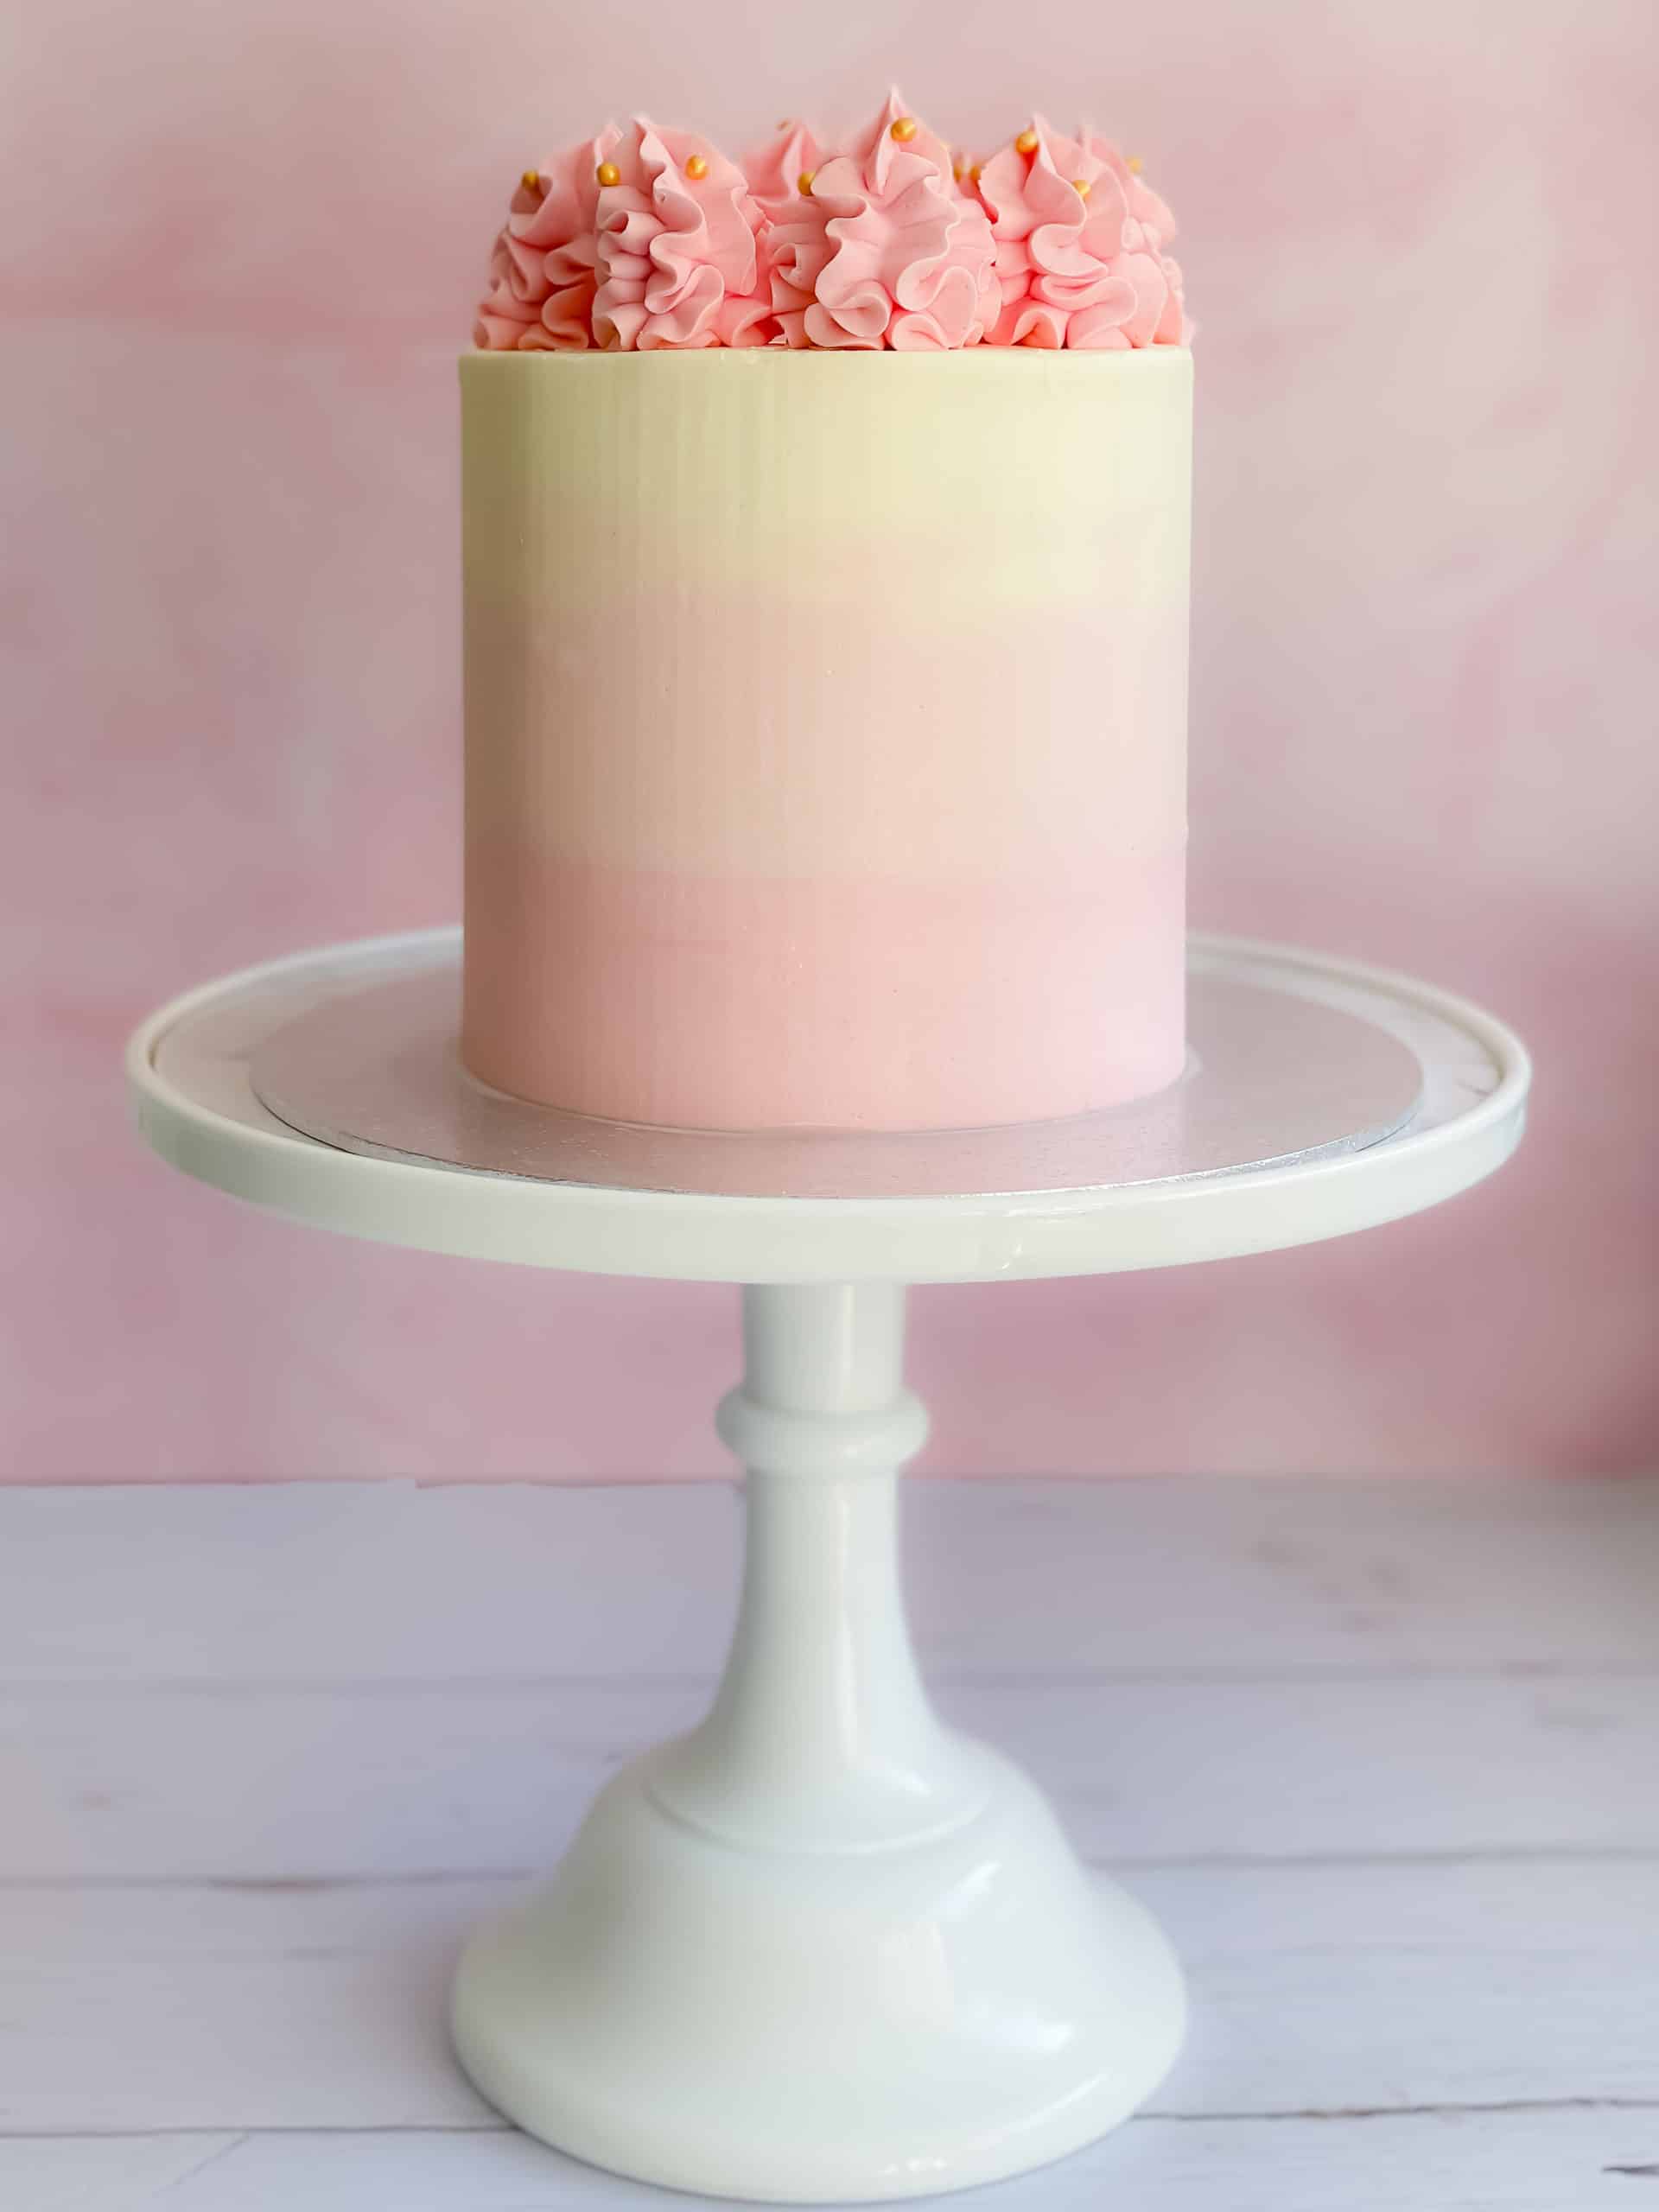 Pink ombre chiffon cake Recipe